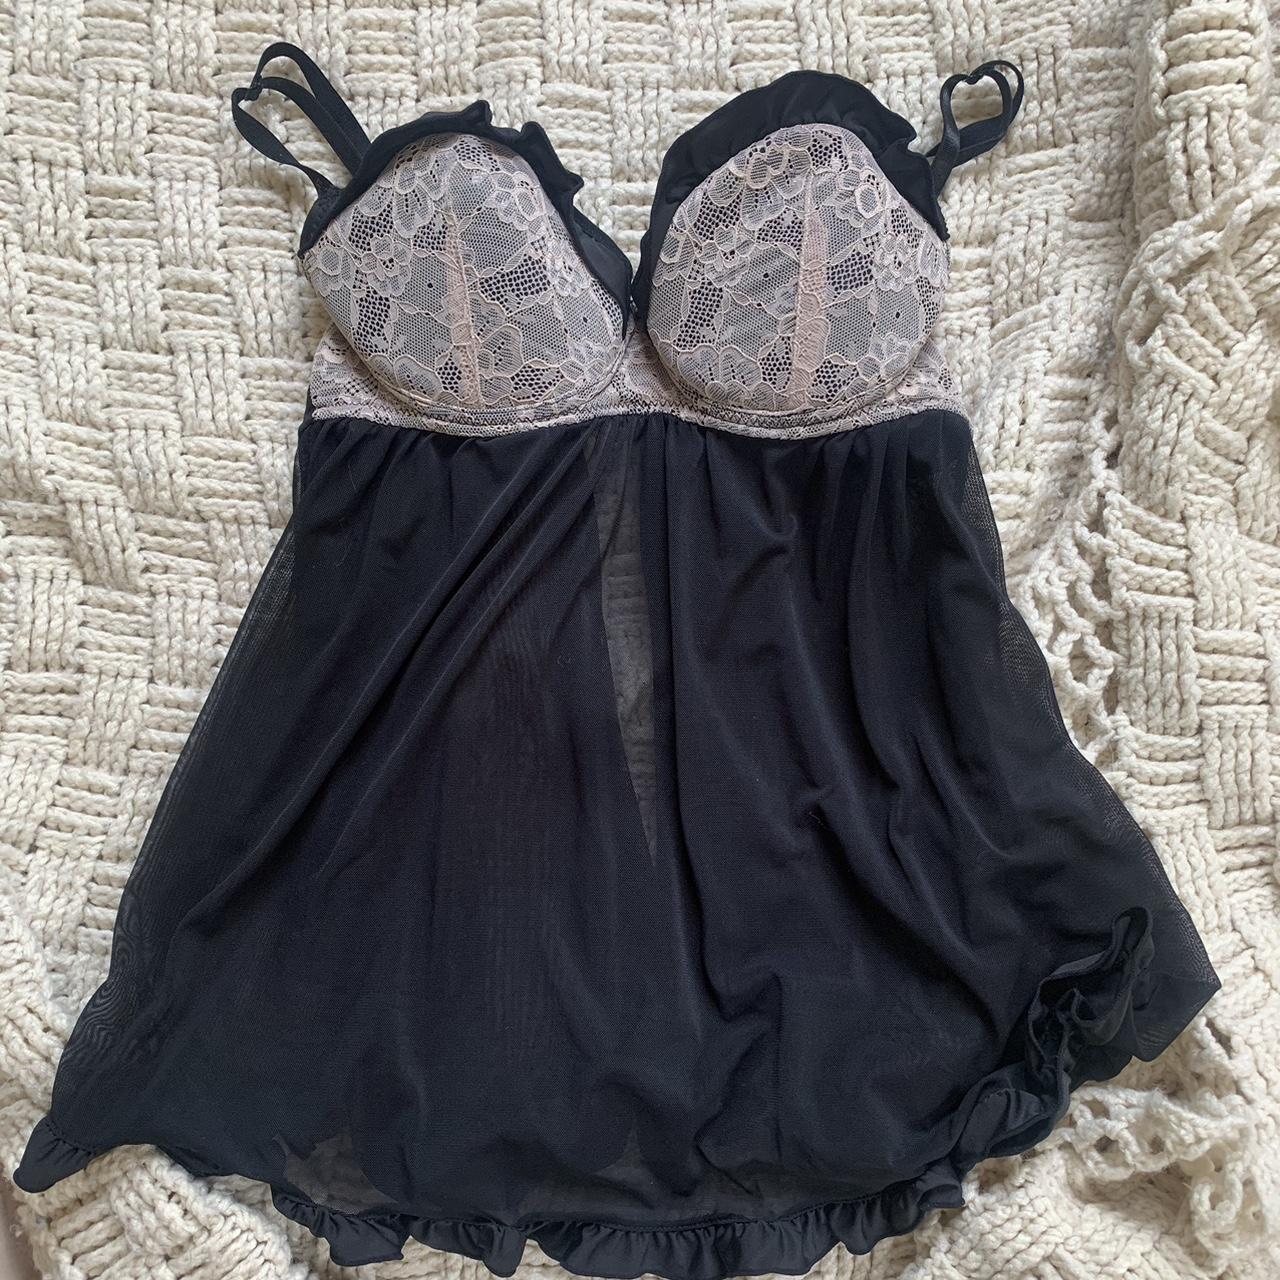 Jezebel black and white lace babydoll lingerie - Depop